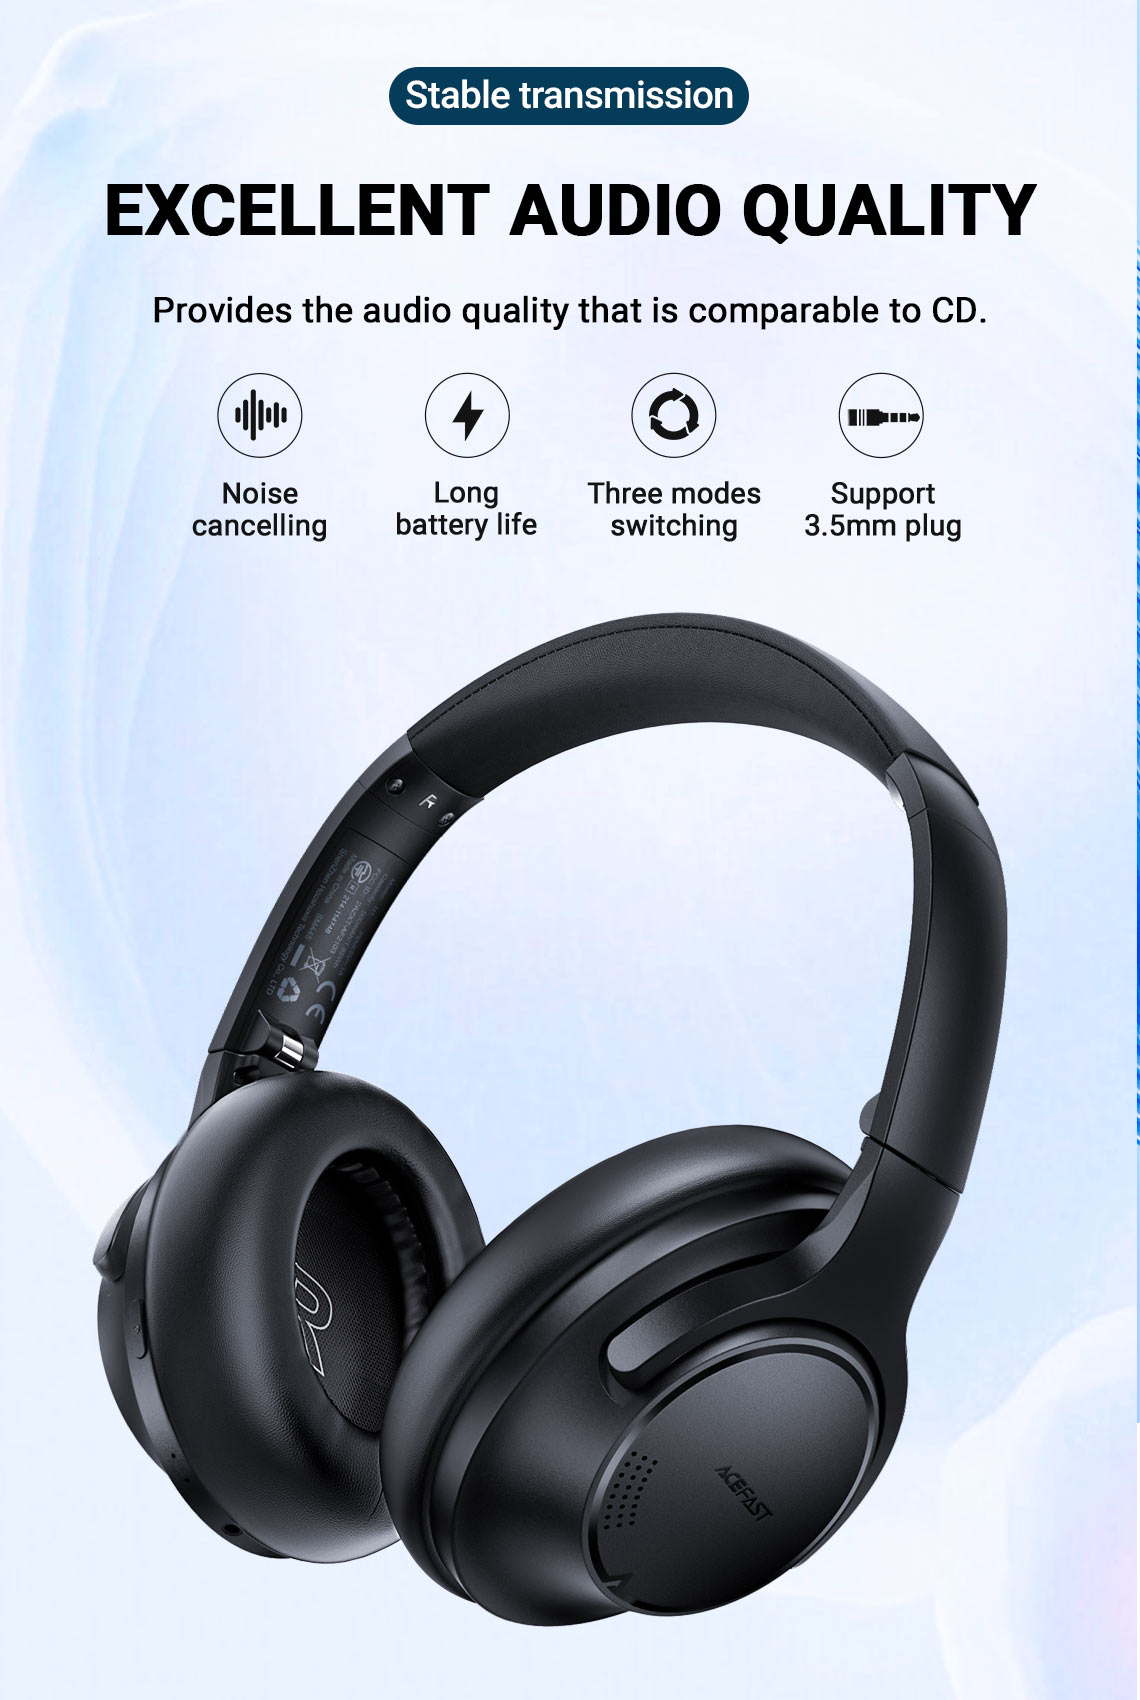 acefast h1 hybrid anc headphones excellent audio quality